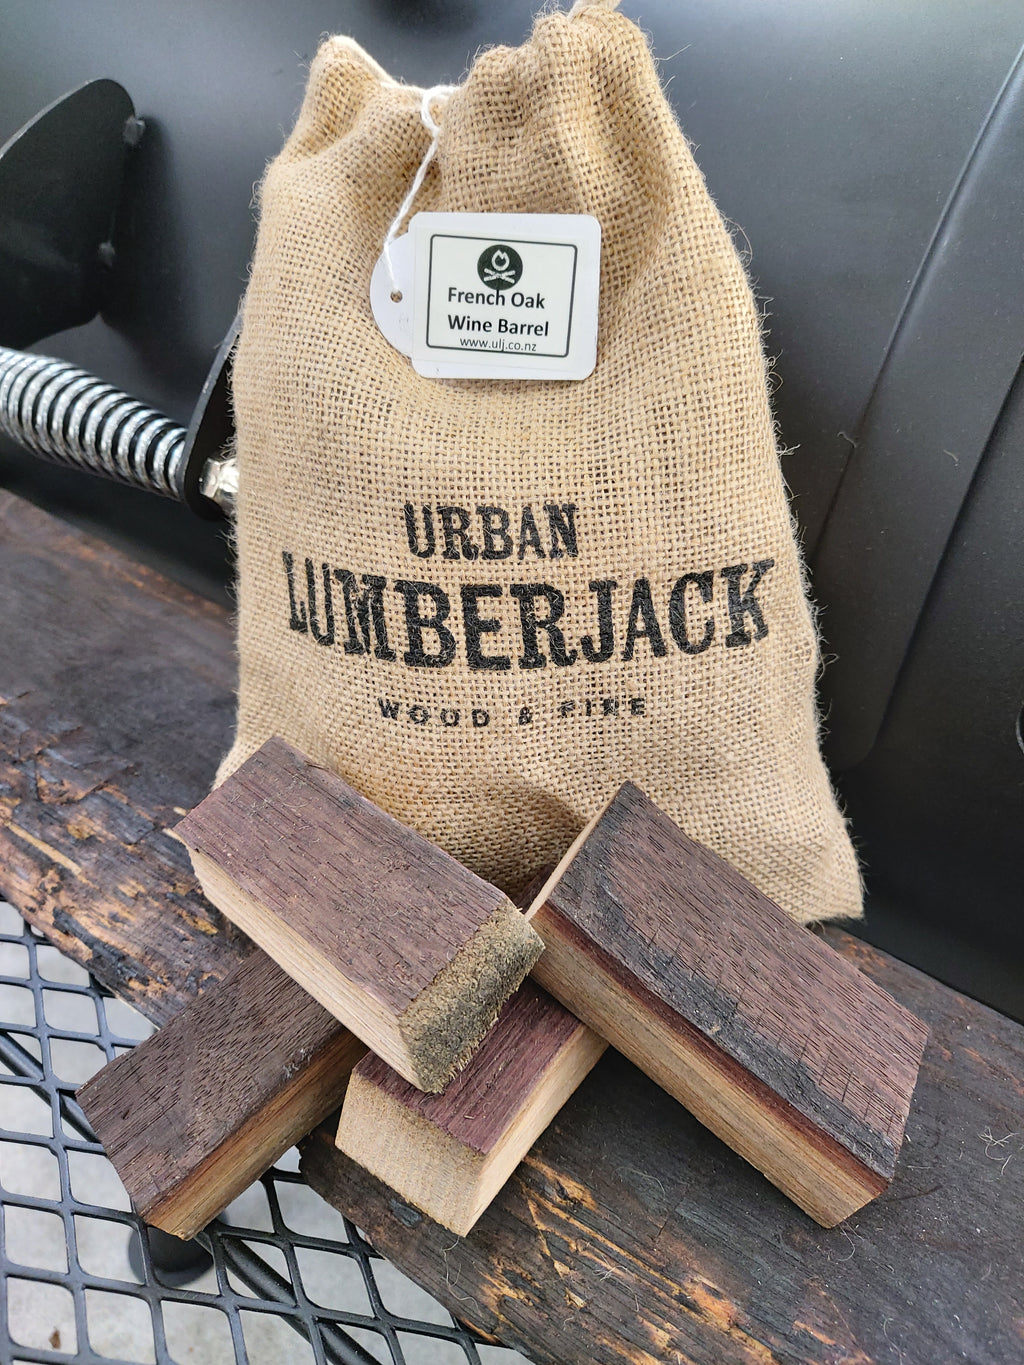 French Oak Wine Barrel Chunks 2kg by Urban Lumberjack